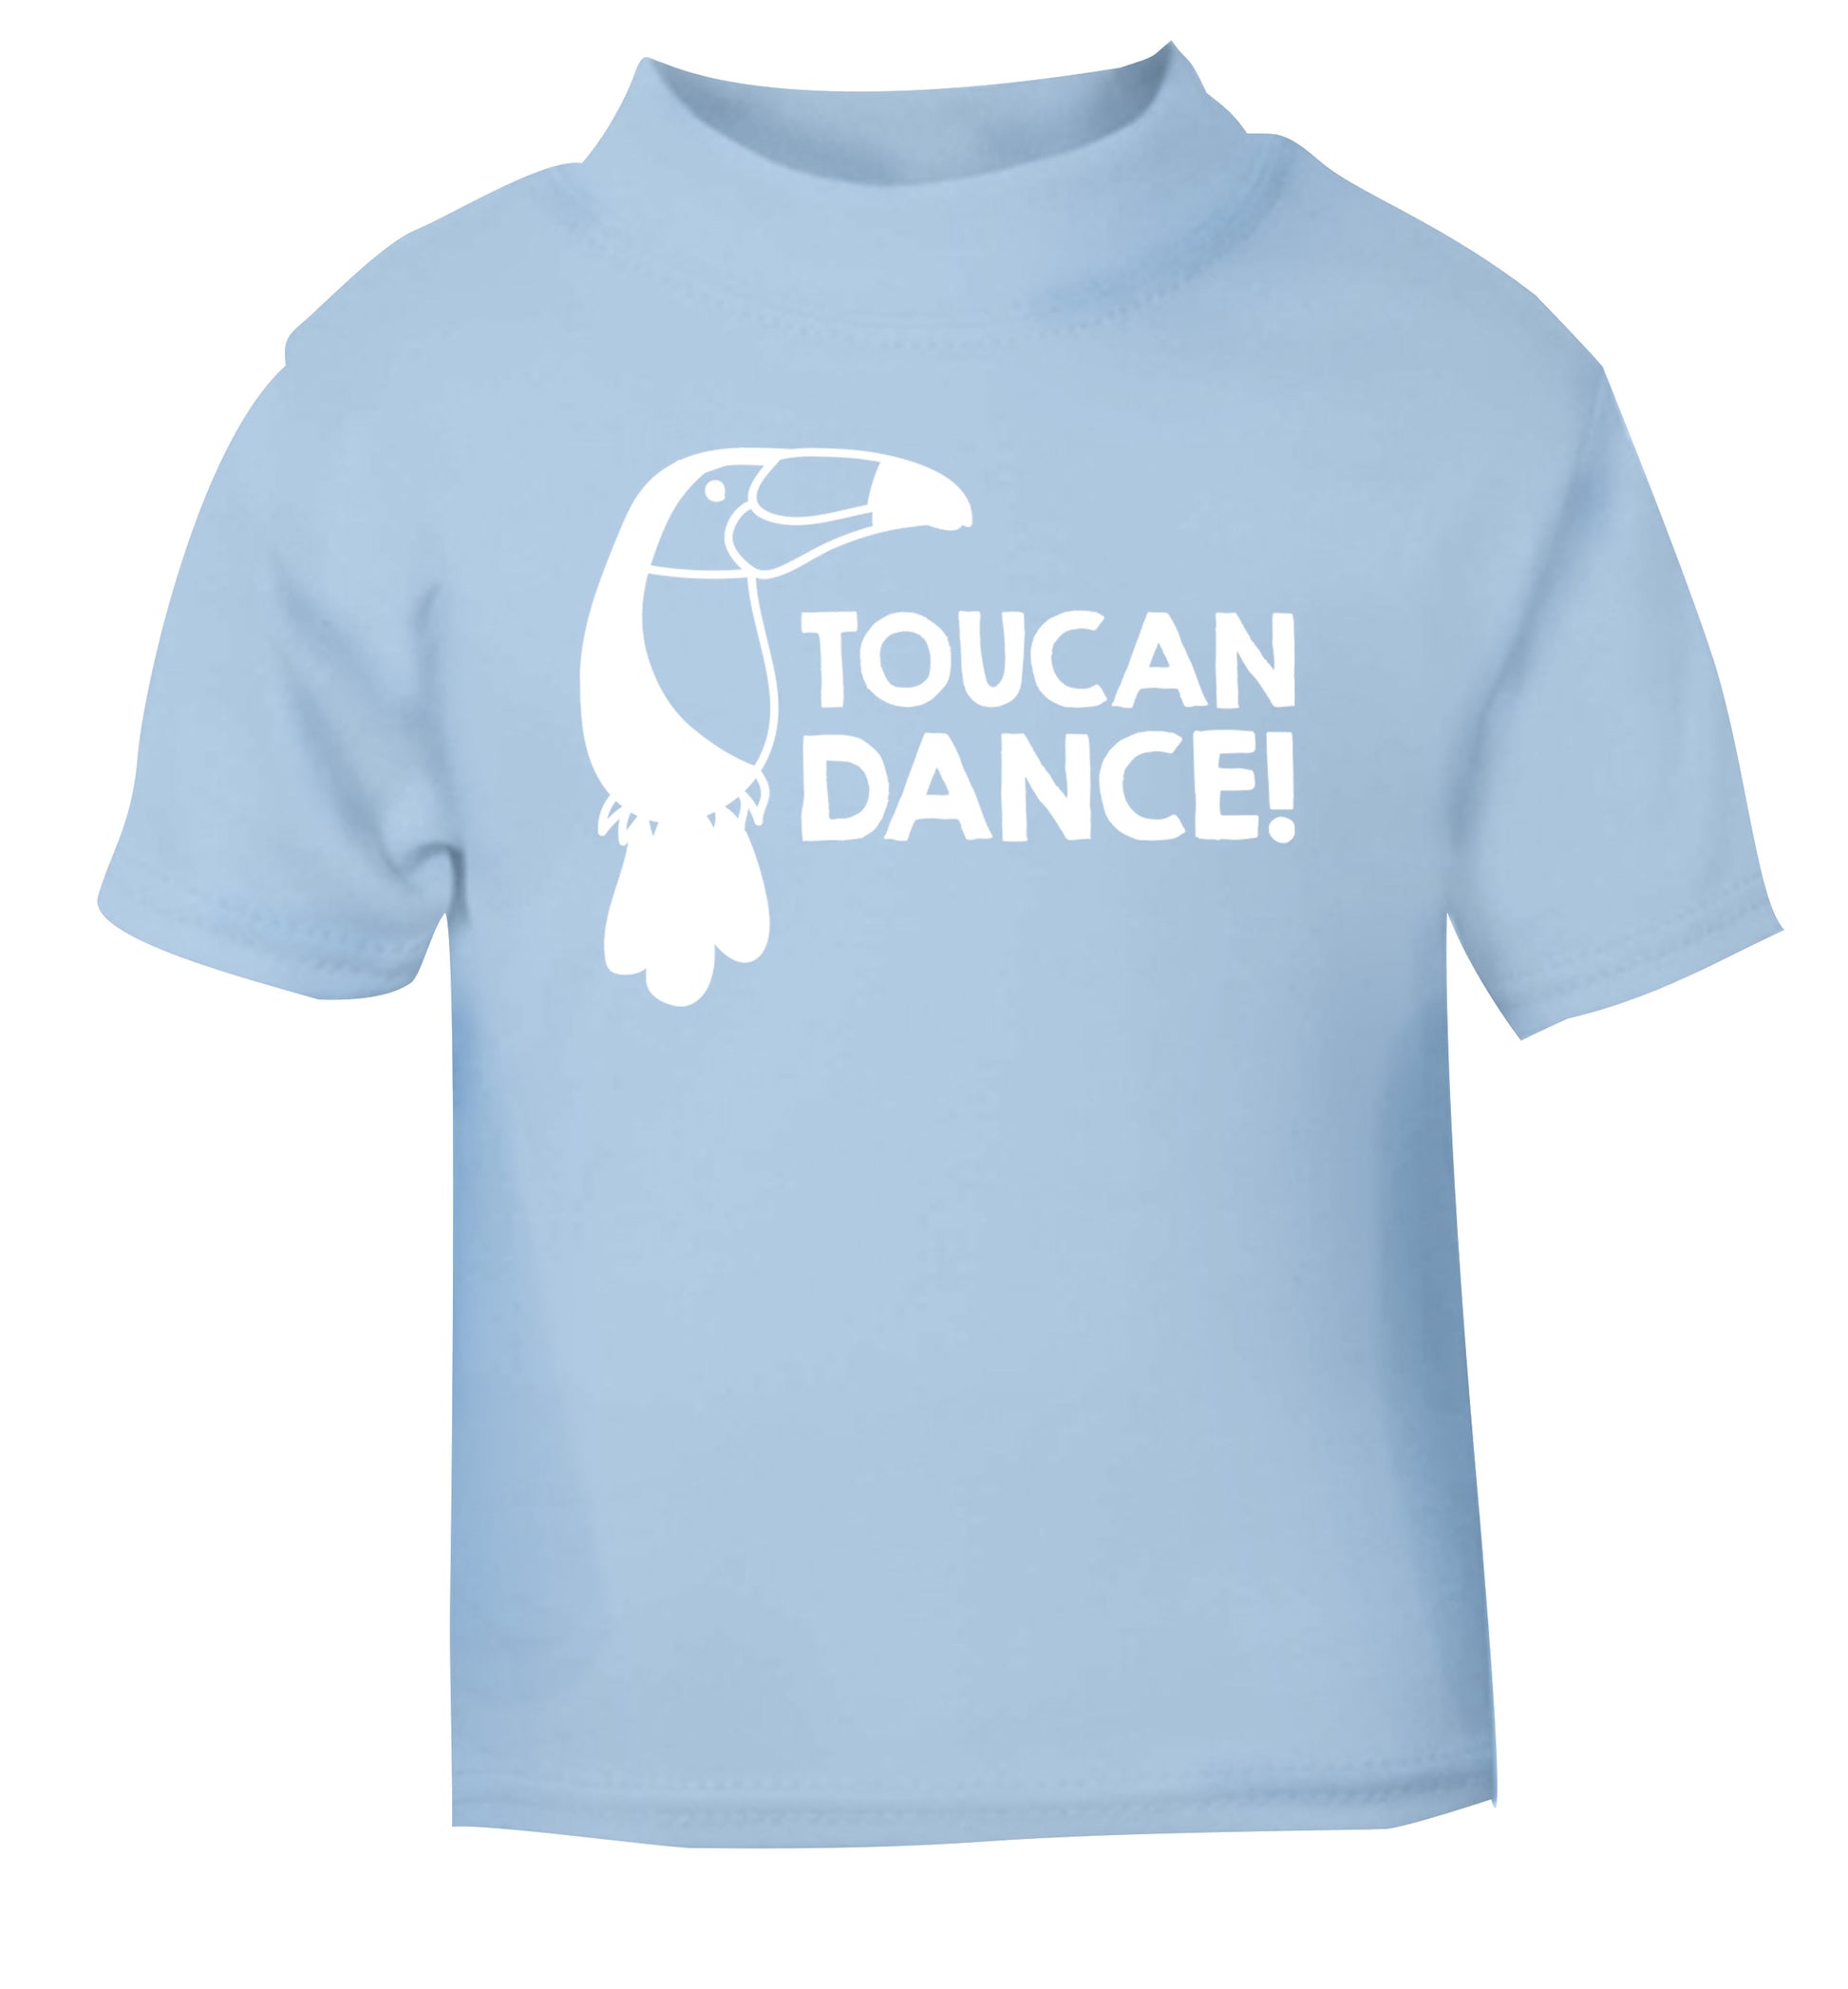 Toucan dance light blue Baby Toddler Tshirt 2 Years